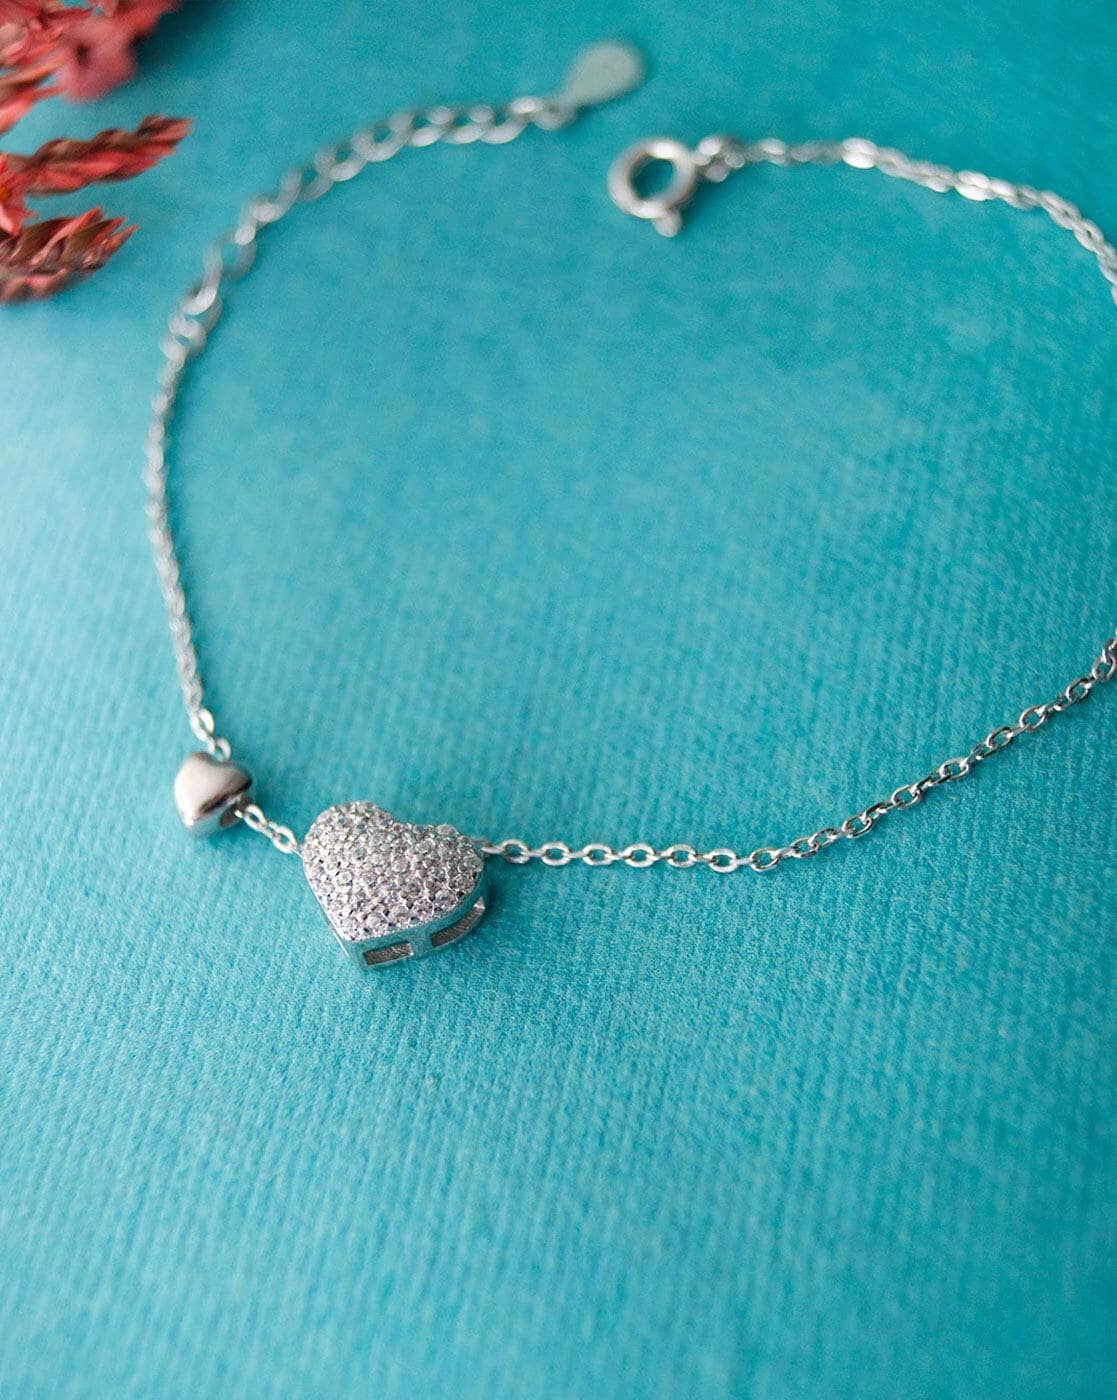 Girls Sterling Silver Engraved Adjustable Heart Bangle Bracelet – Cherished  Moments Jewelry